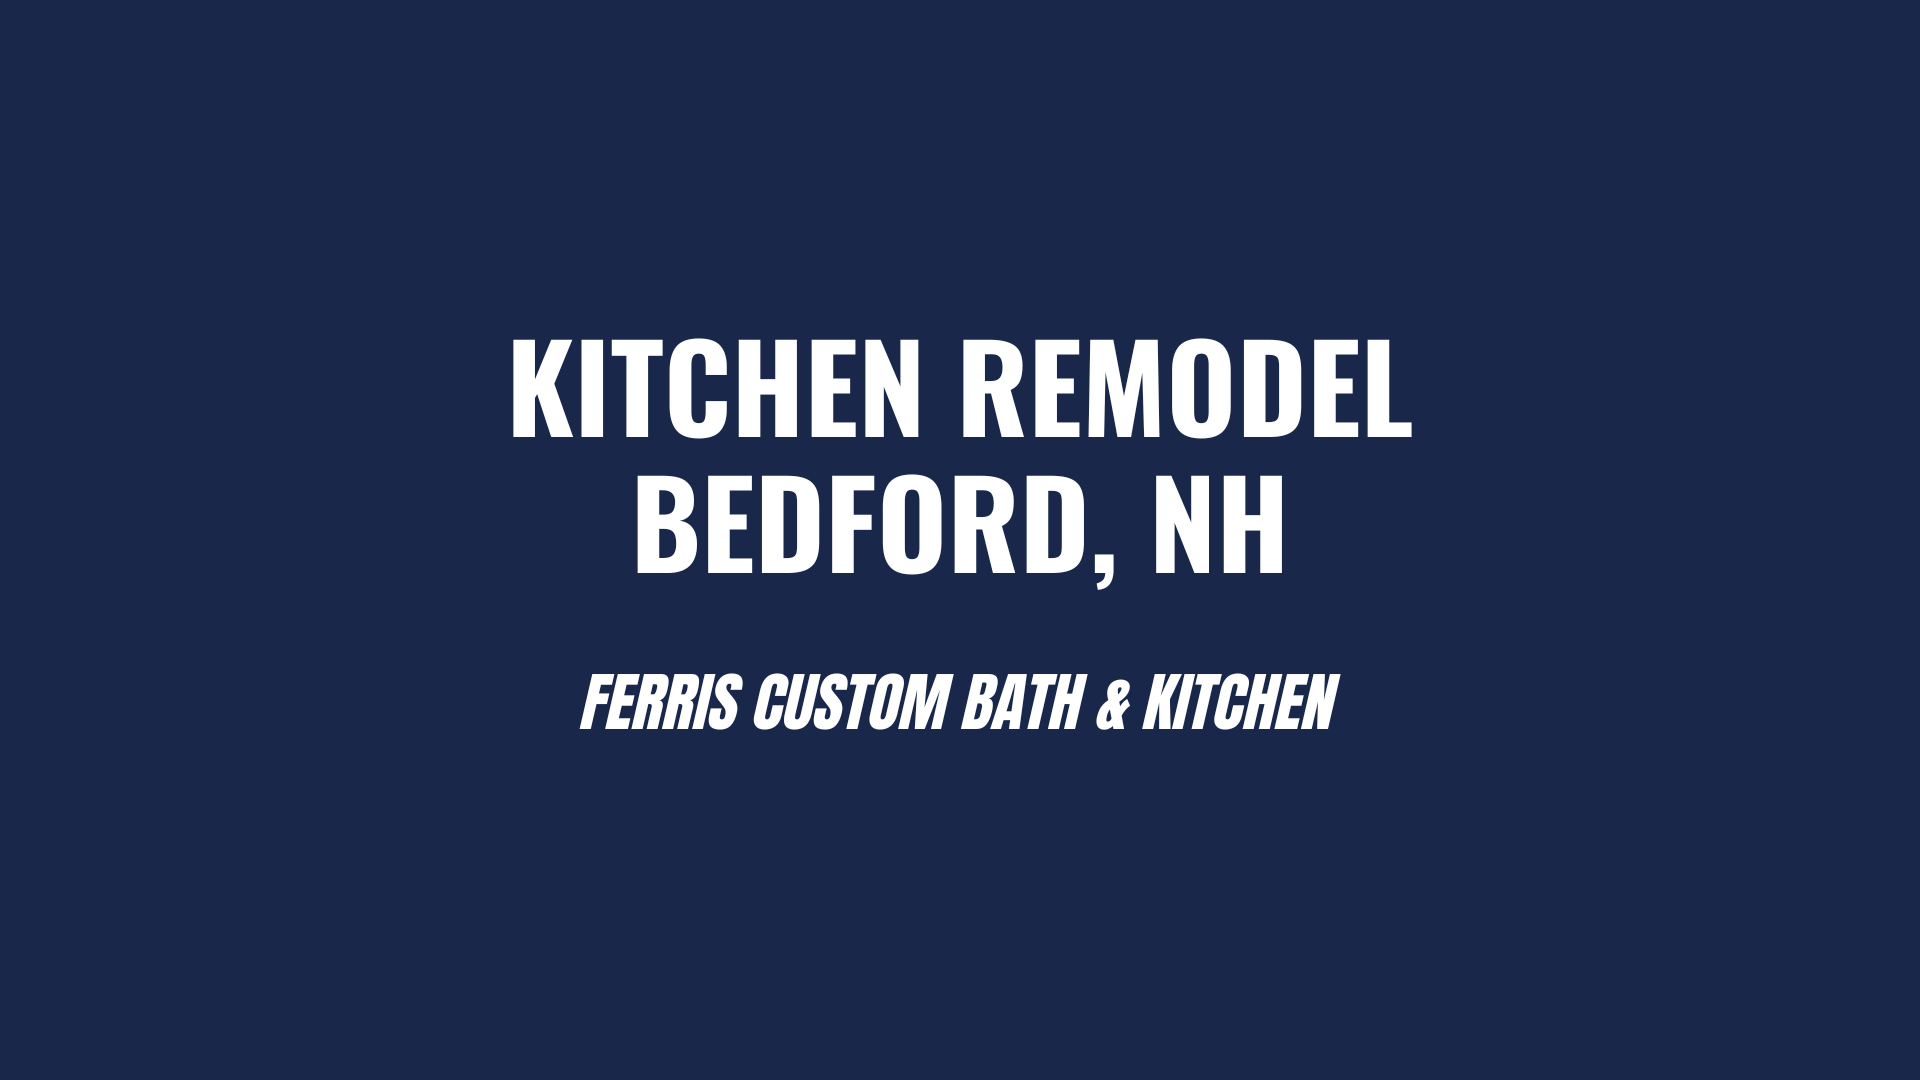 Kitchen Remodel in Bedford, NH by Ferris Custom Bath & Kitchen